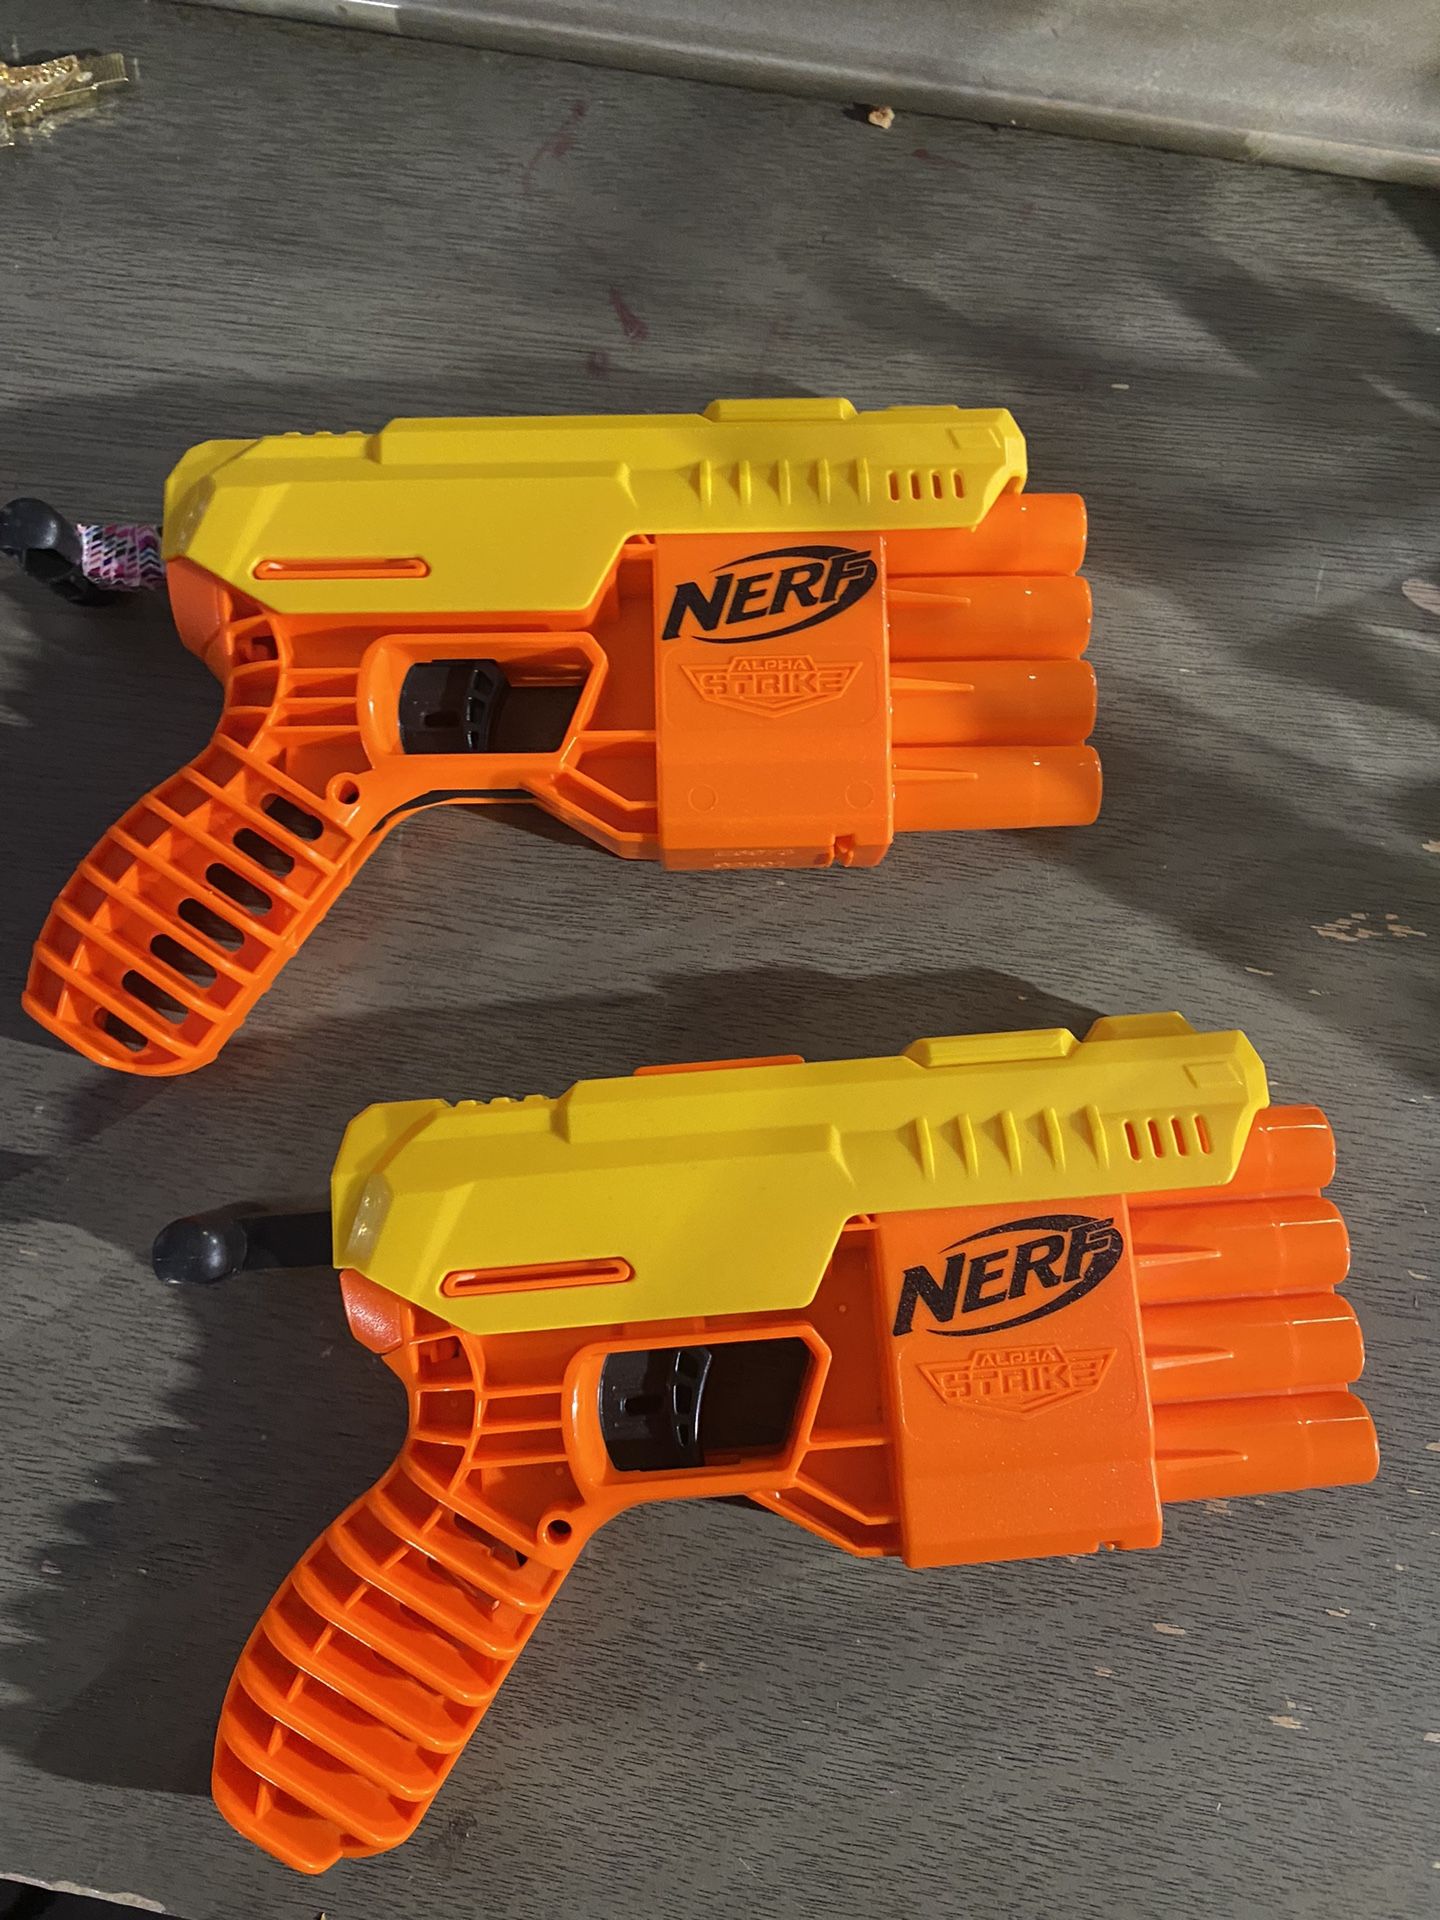 2 Nerf Guns And a Box Full Of Darts 